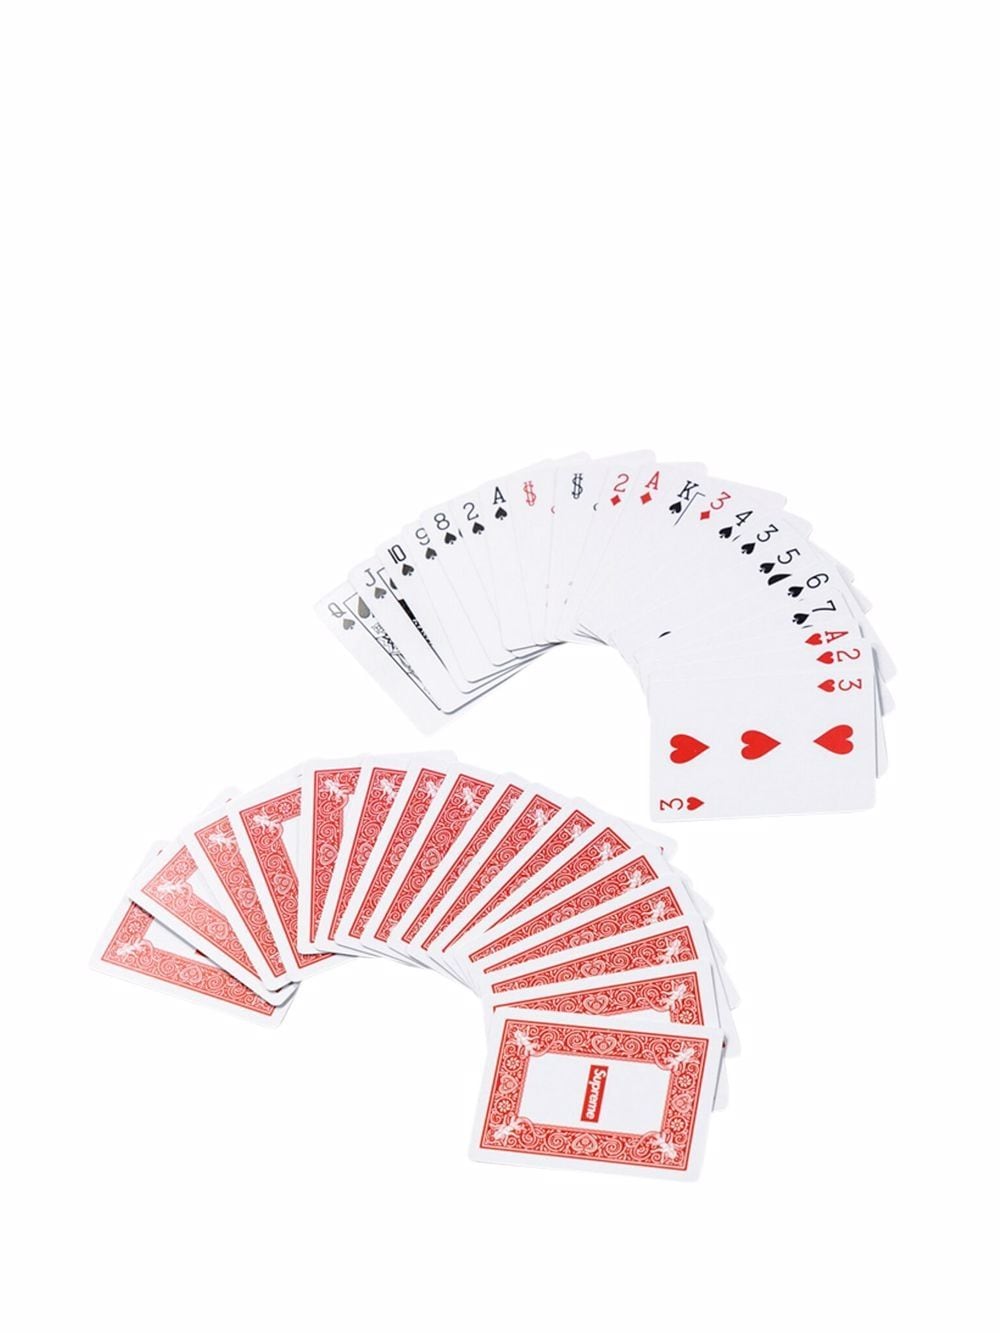 Supreme x Bicycle mini playing cards deck